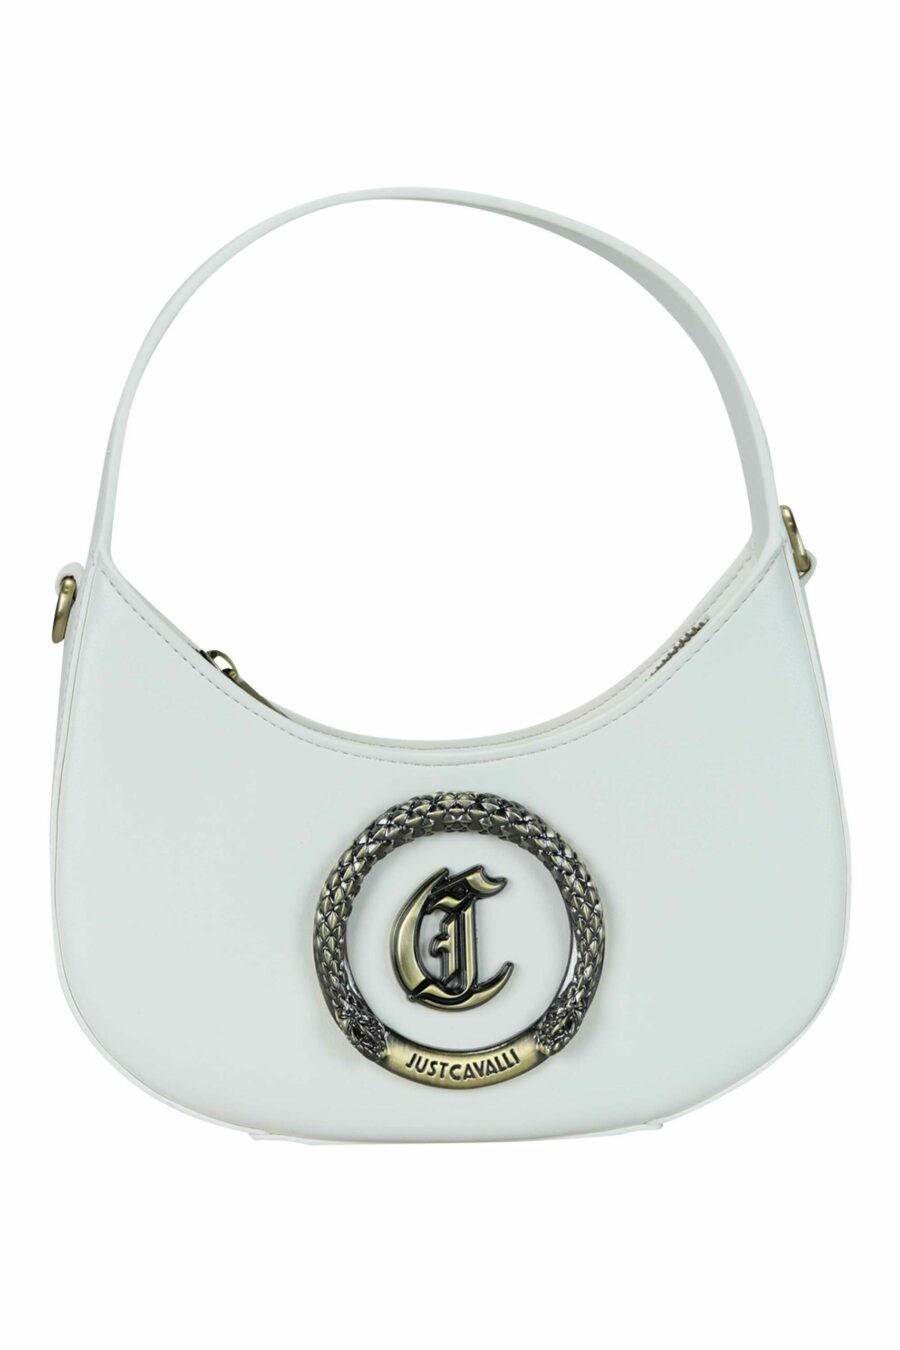 White shoulder bag with golden circular "c" logo - 8052672643797 scaled